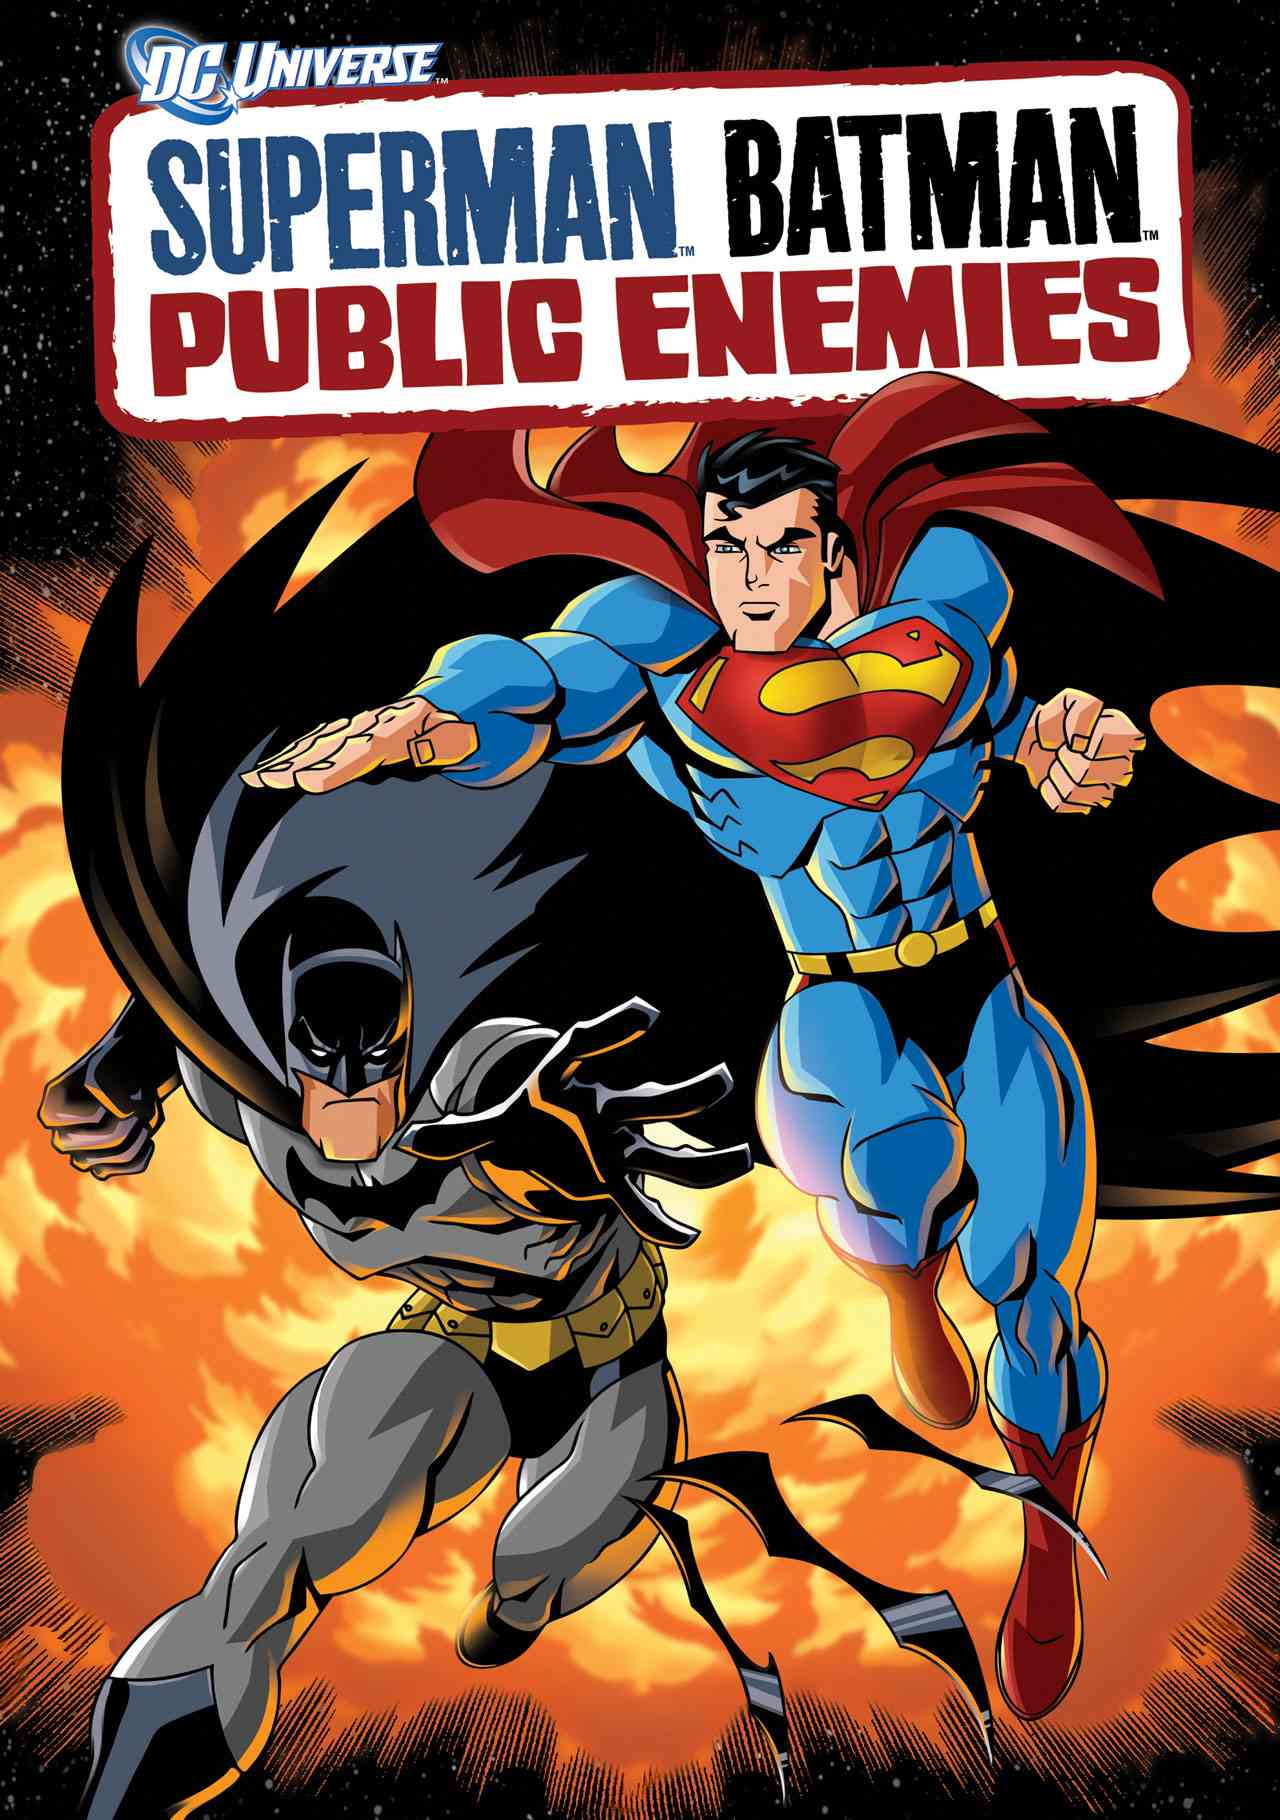 FULL MOVIE: Superman/Batman: Public Enemies (2009) [Action]